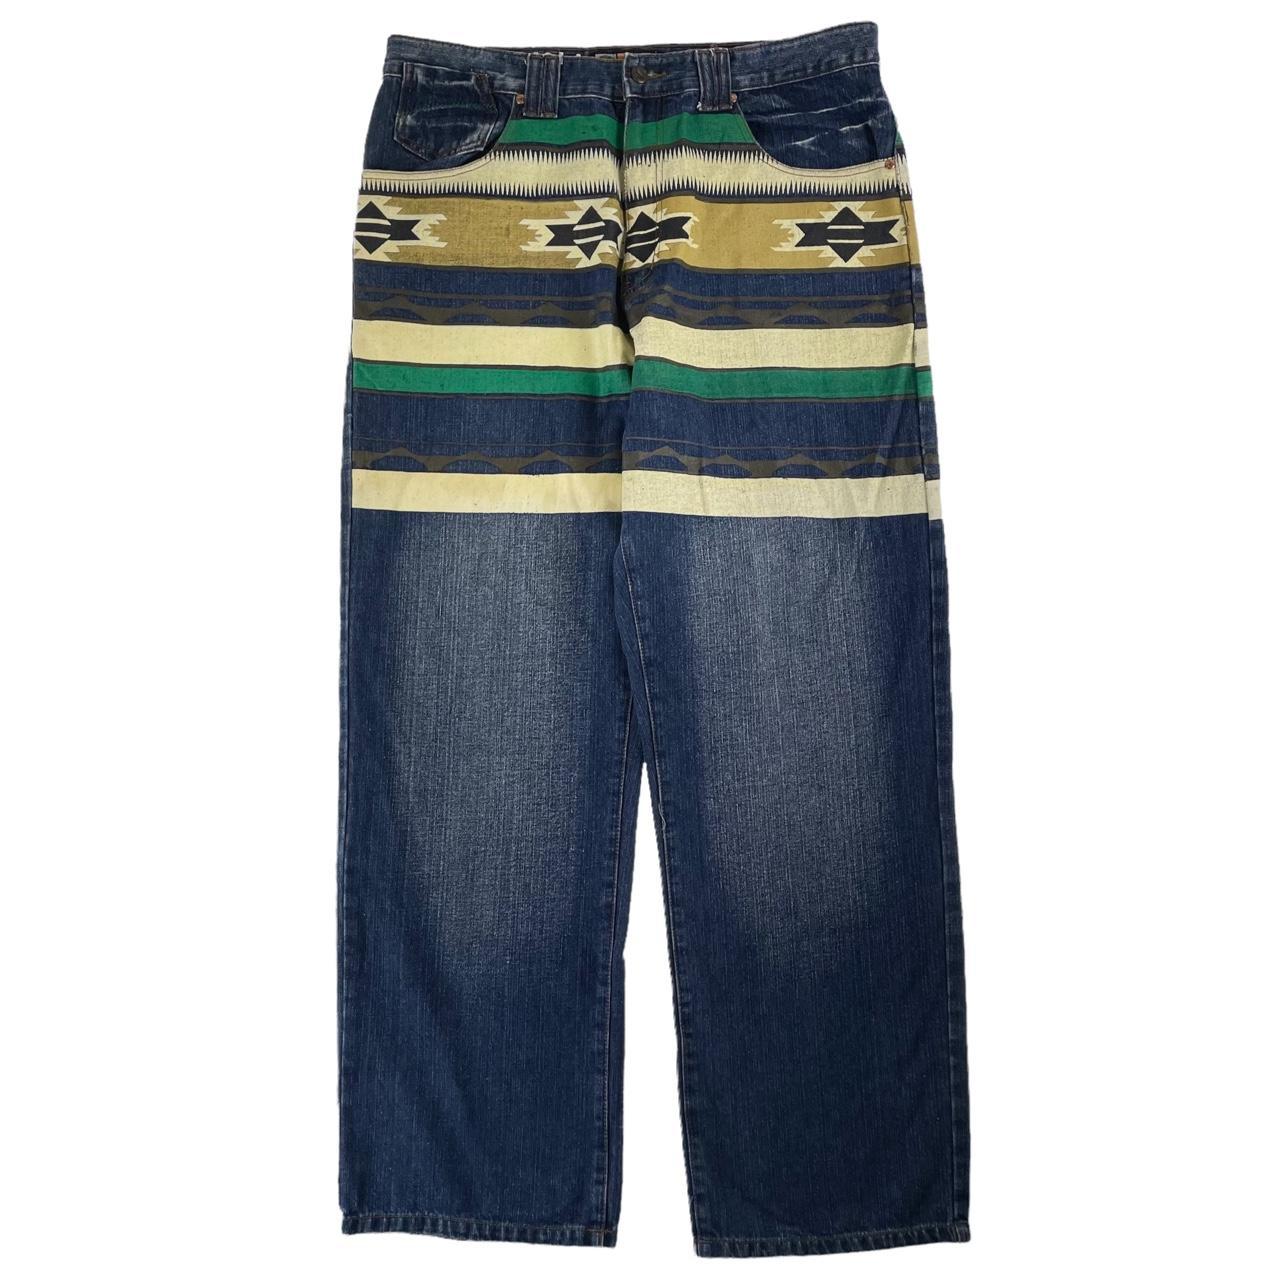 Vintage Aztec pattern Japanese denim jeans trousers... - Depop